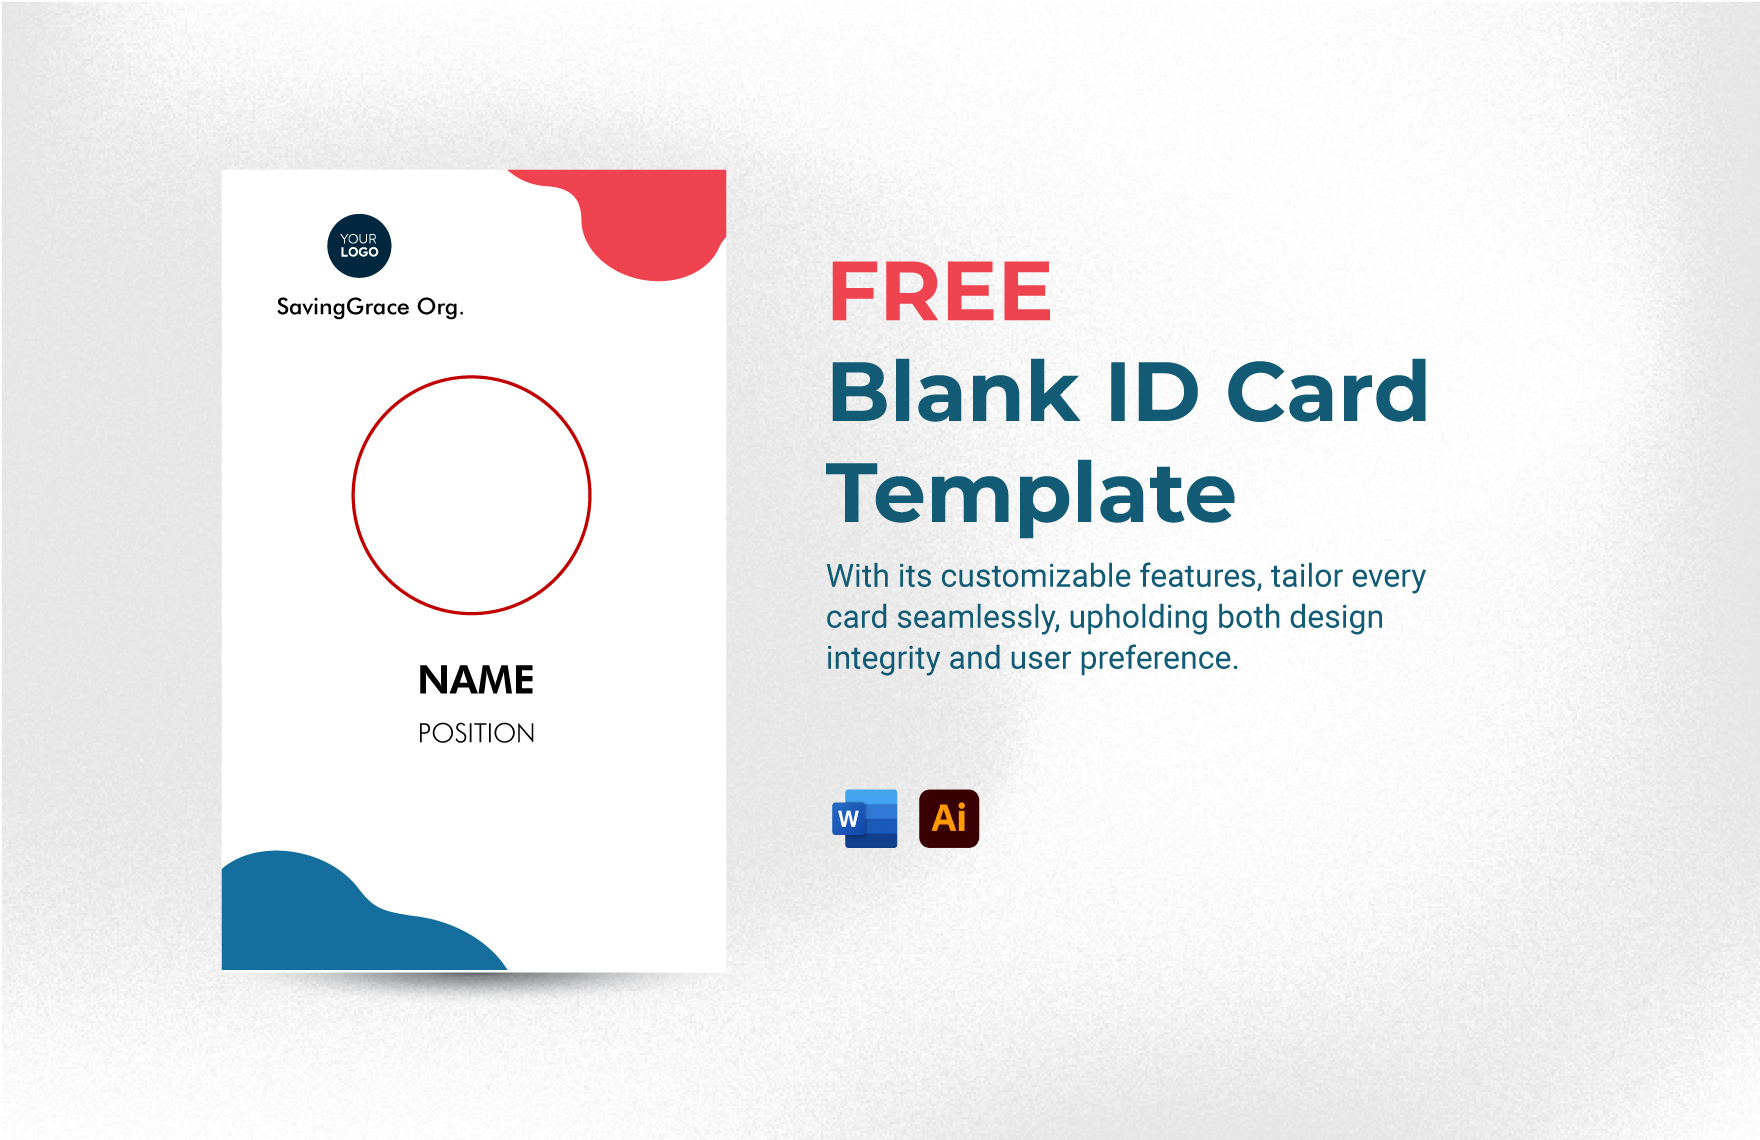 Free Blank ID Card Template